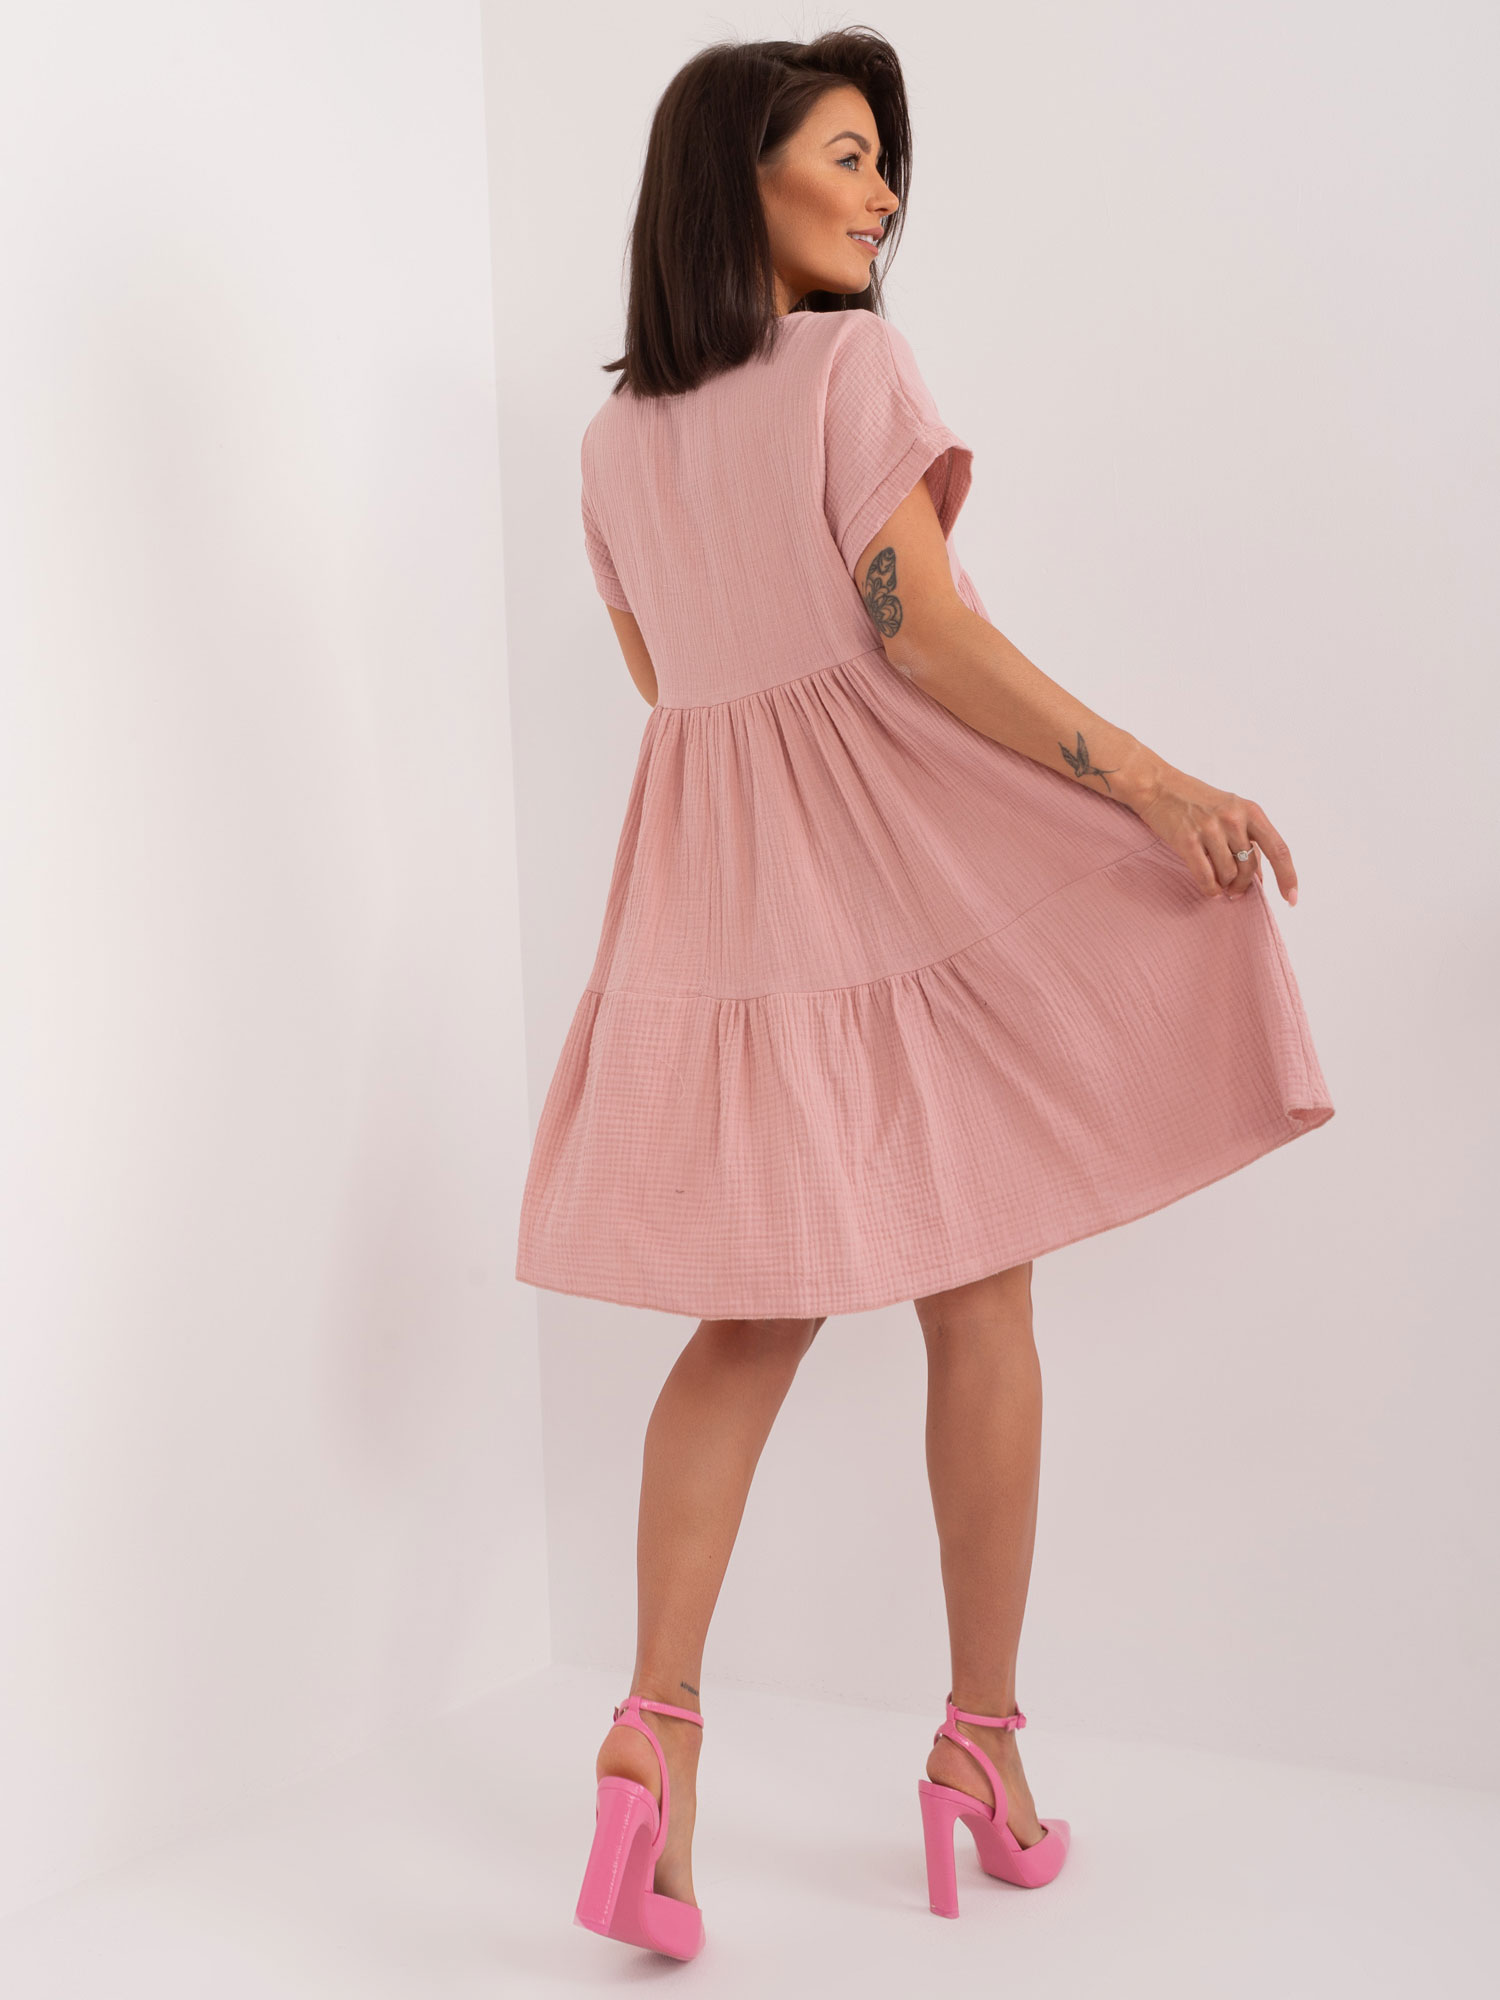 Dusty pink oversize dress